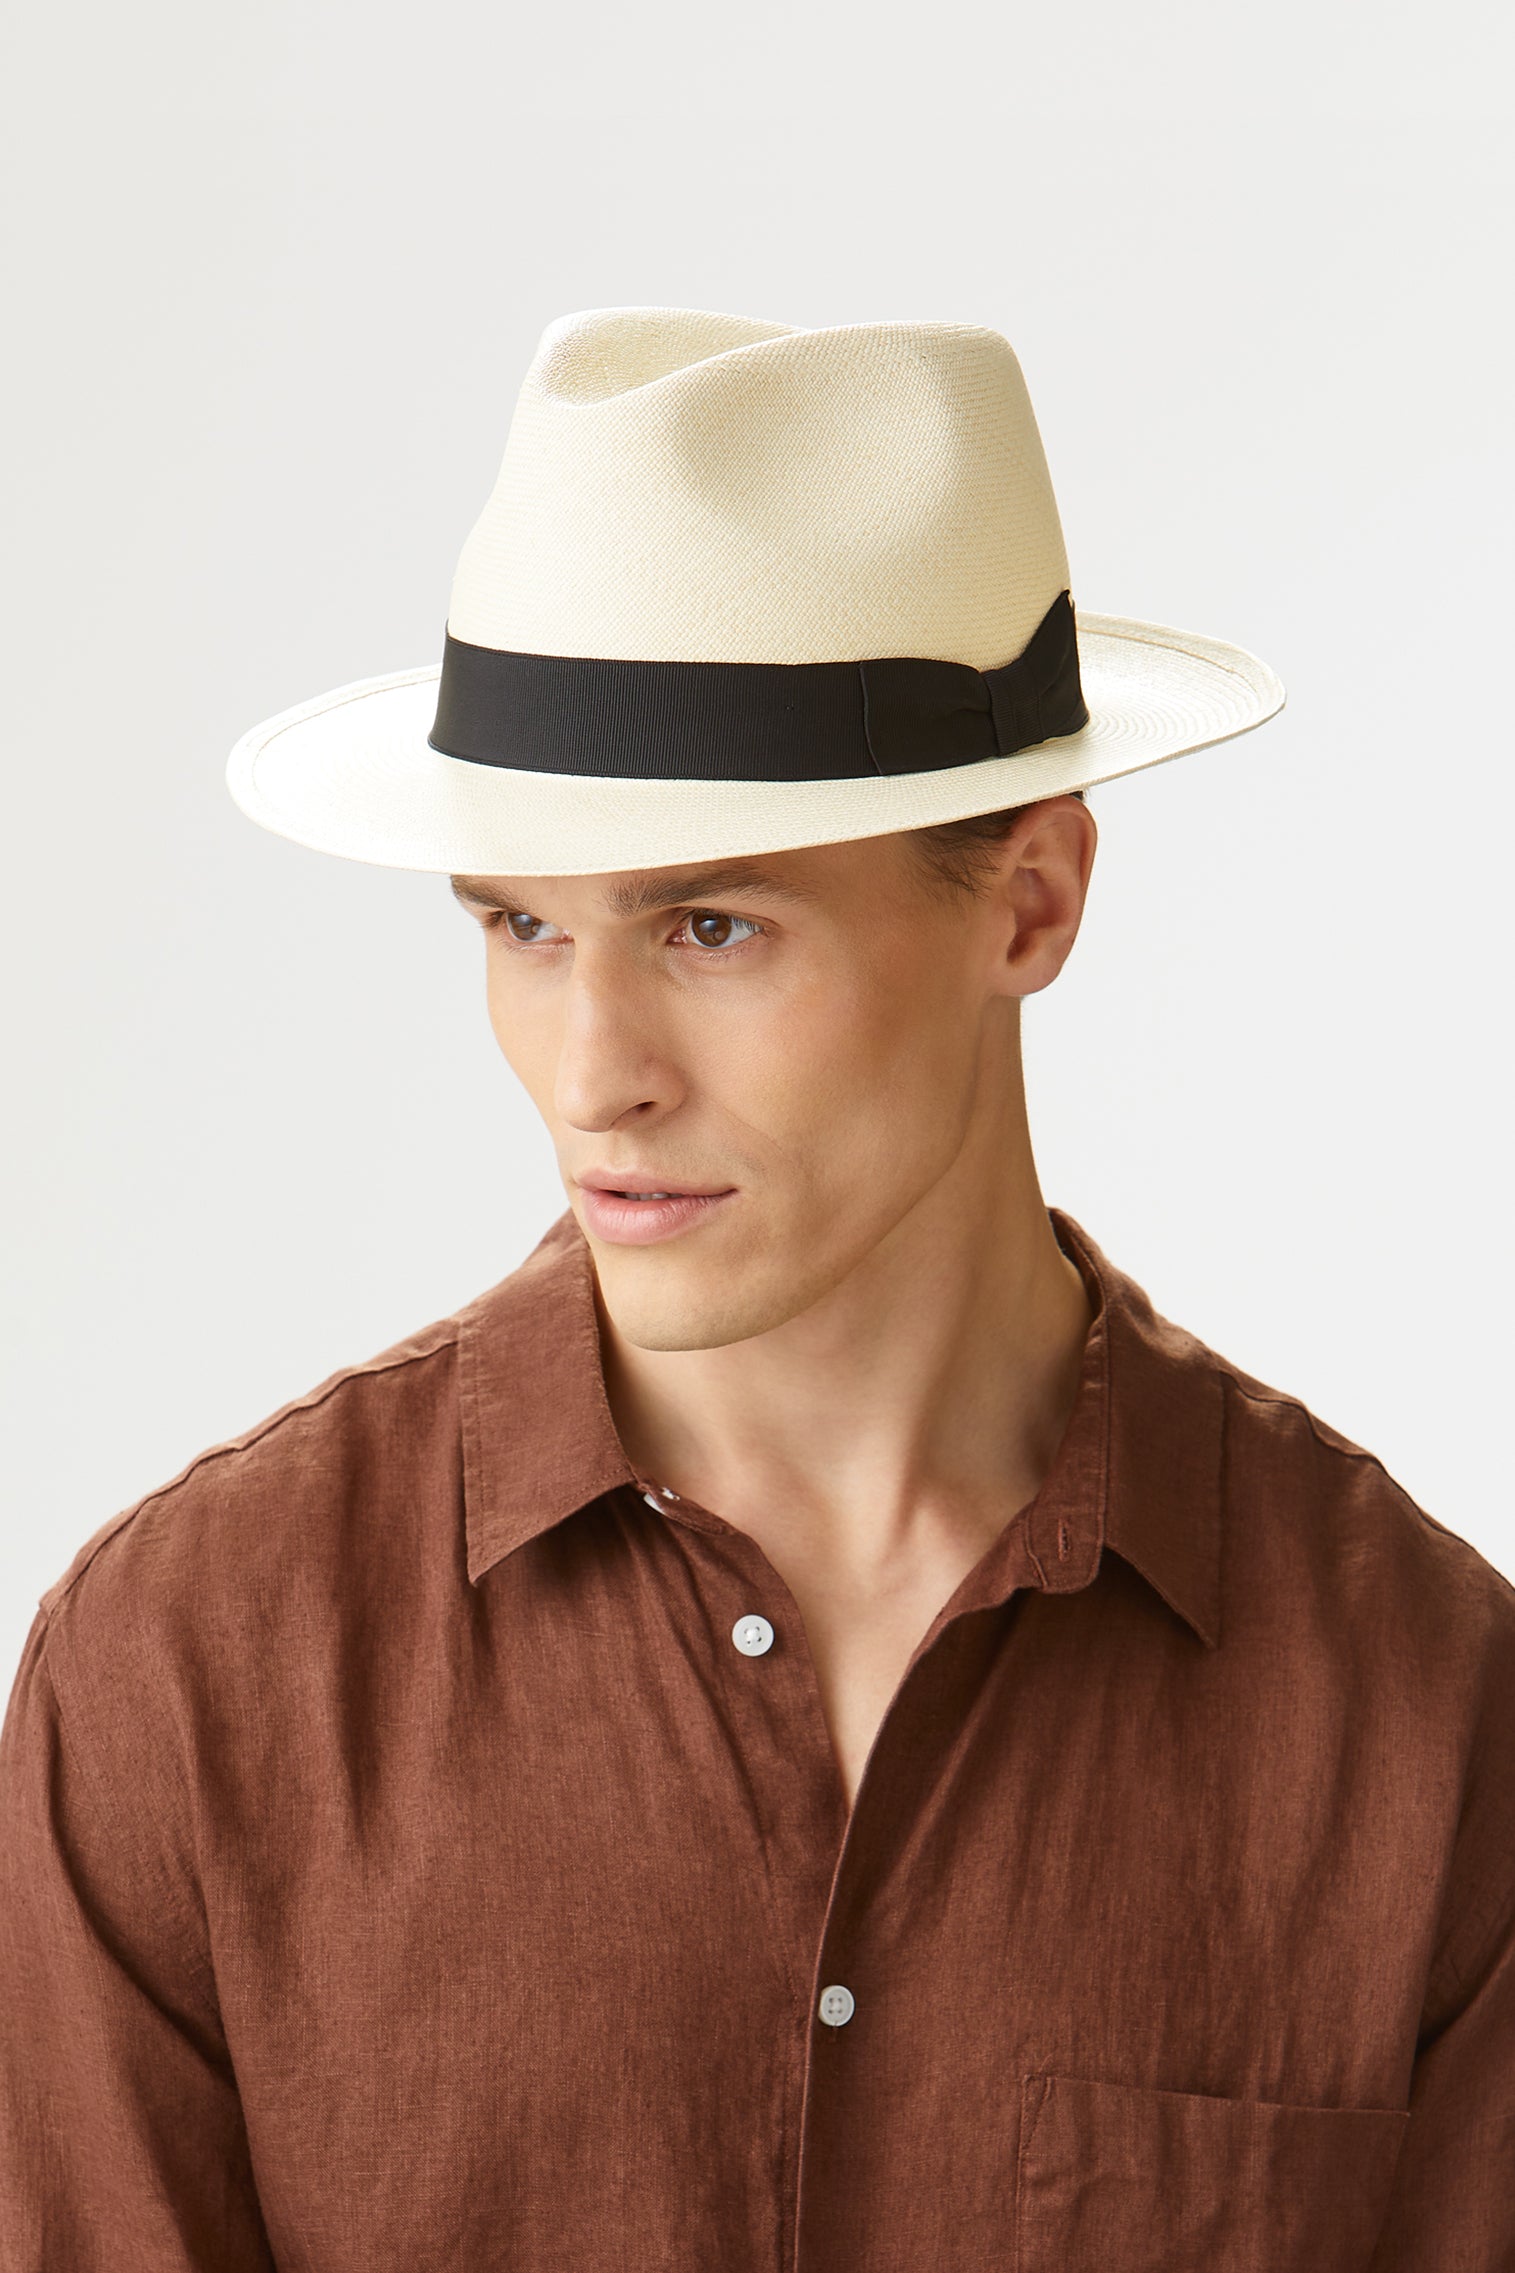 Classic Panama - Best Selling Hats - Lock & Co. Hatters London UK